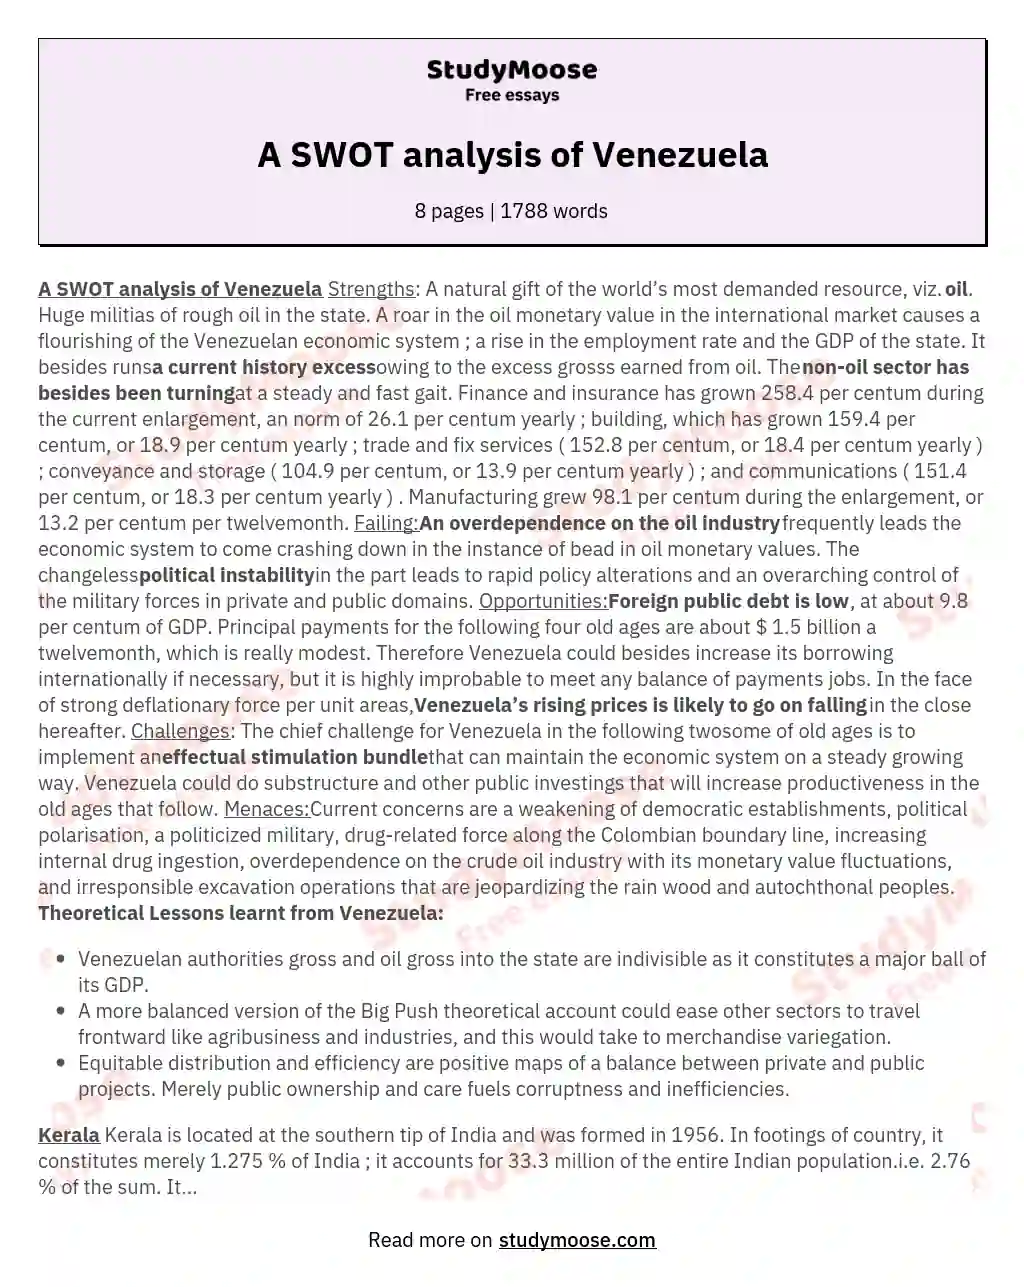 A SWOT analysis of Venezuela essay